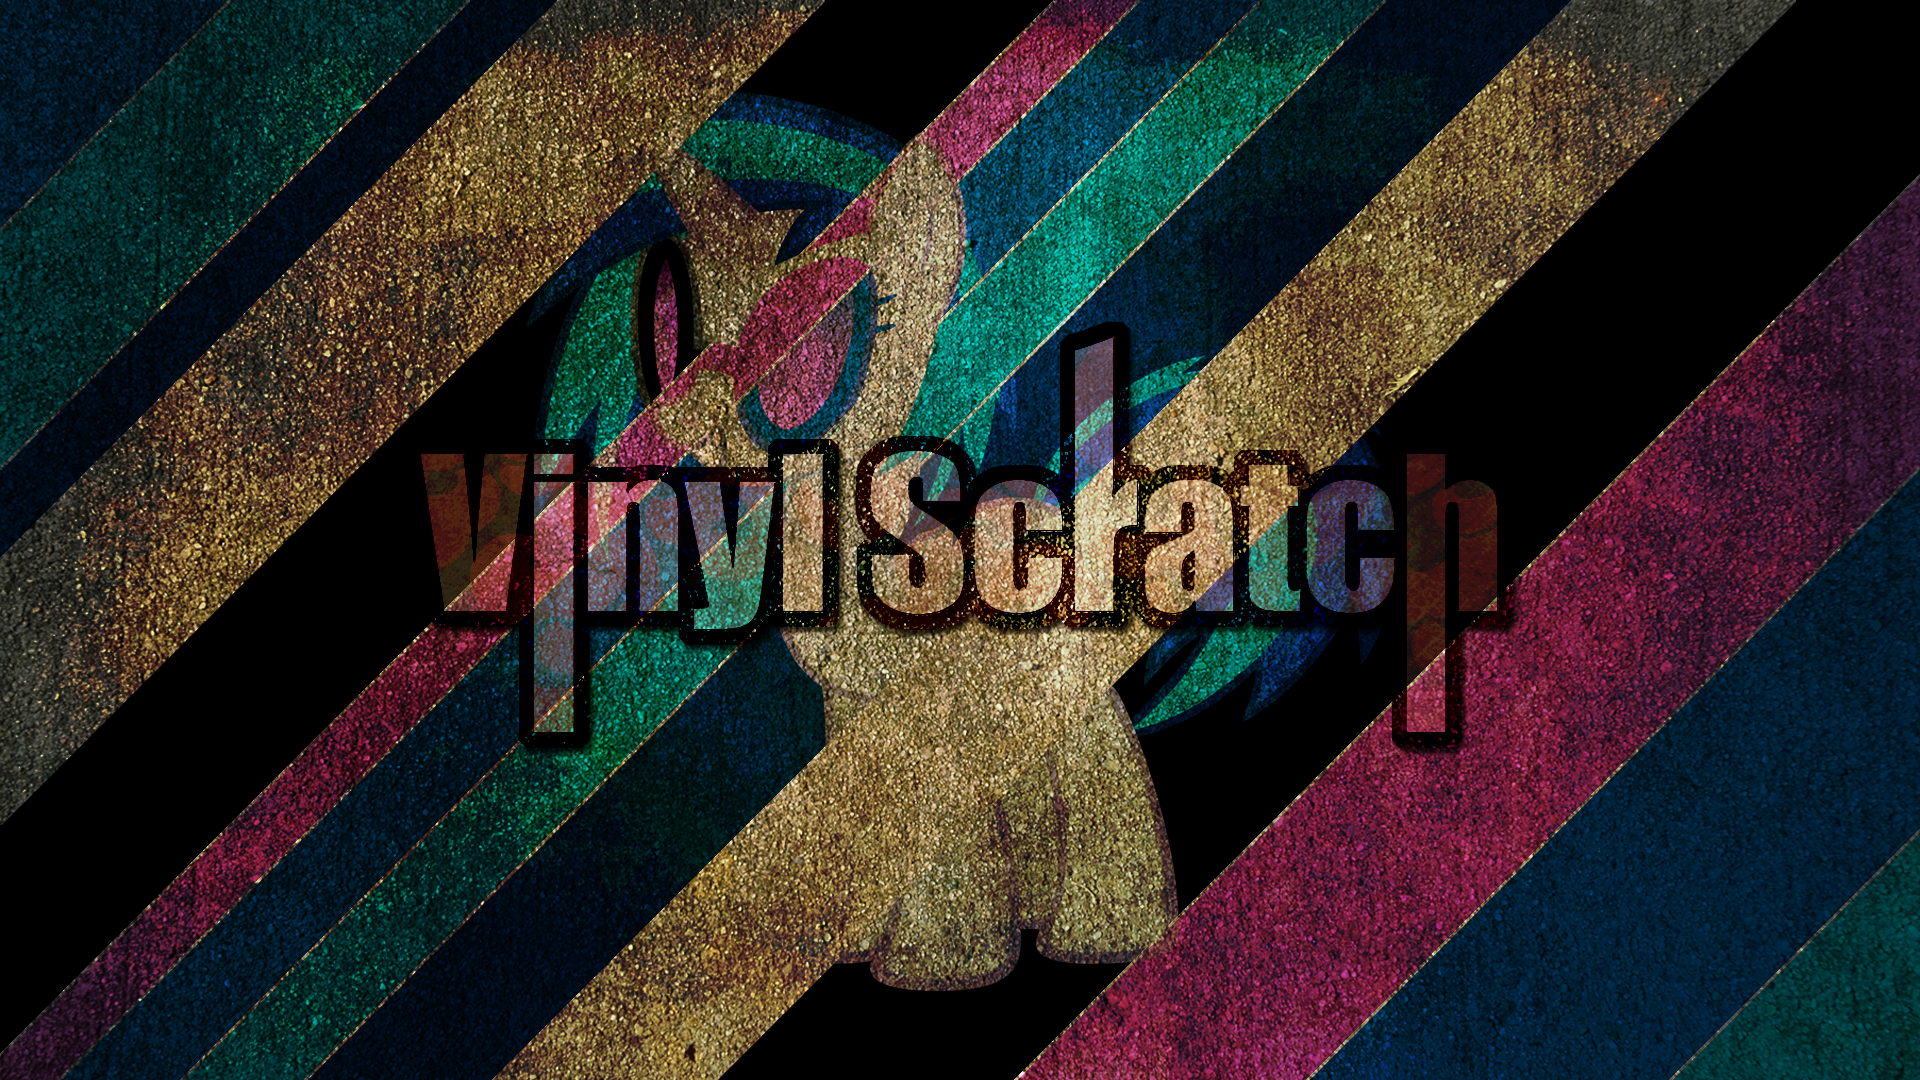 Vinyl Scratch - grunged by pims1978